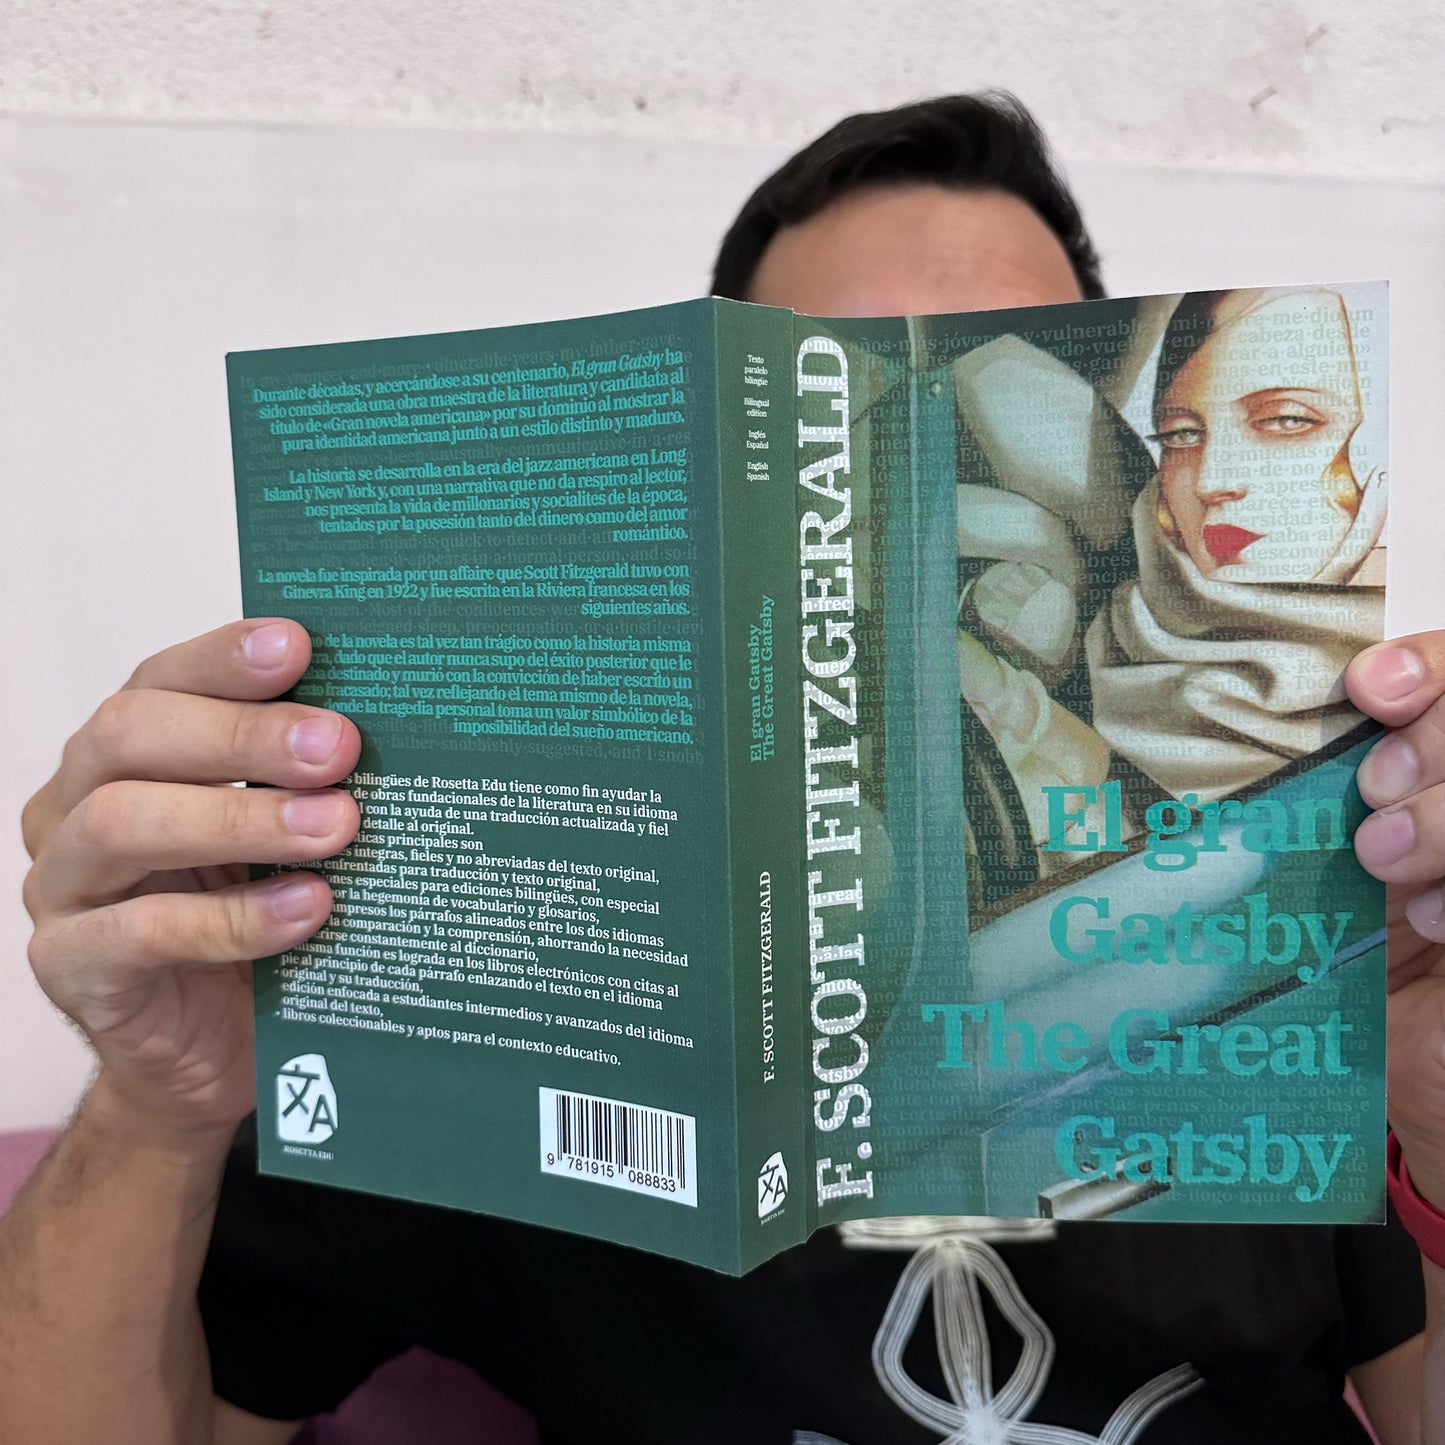 El gran Gatsby - The Great Gatsby | Libro bilingüe - Español / Inglés